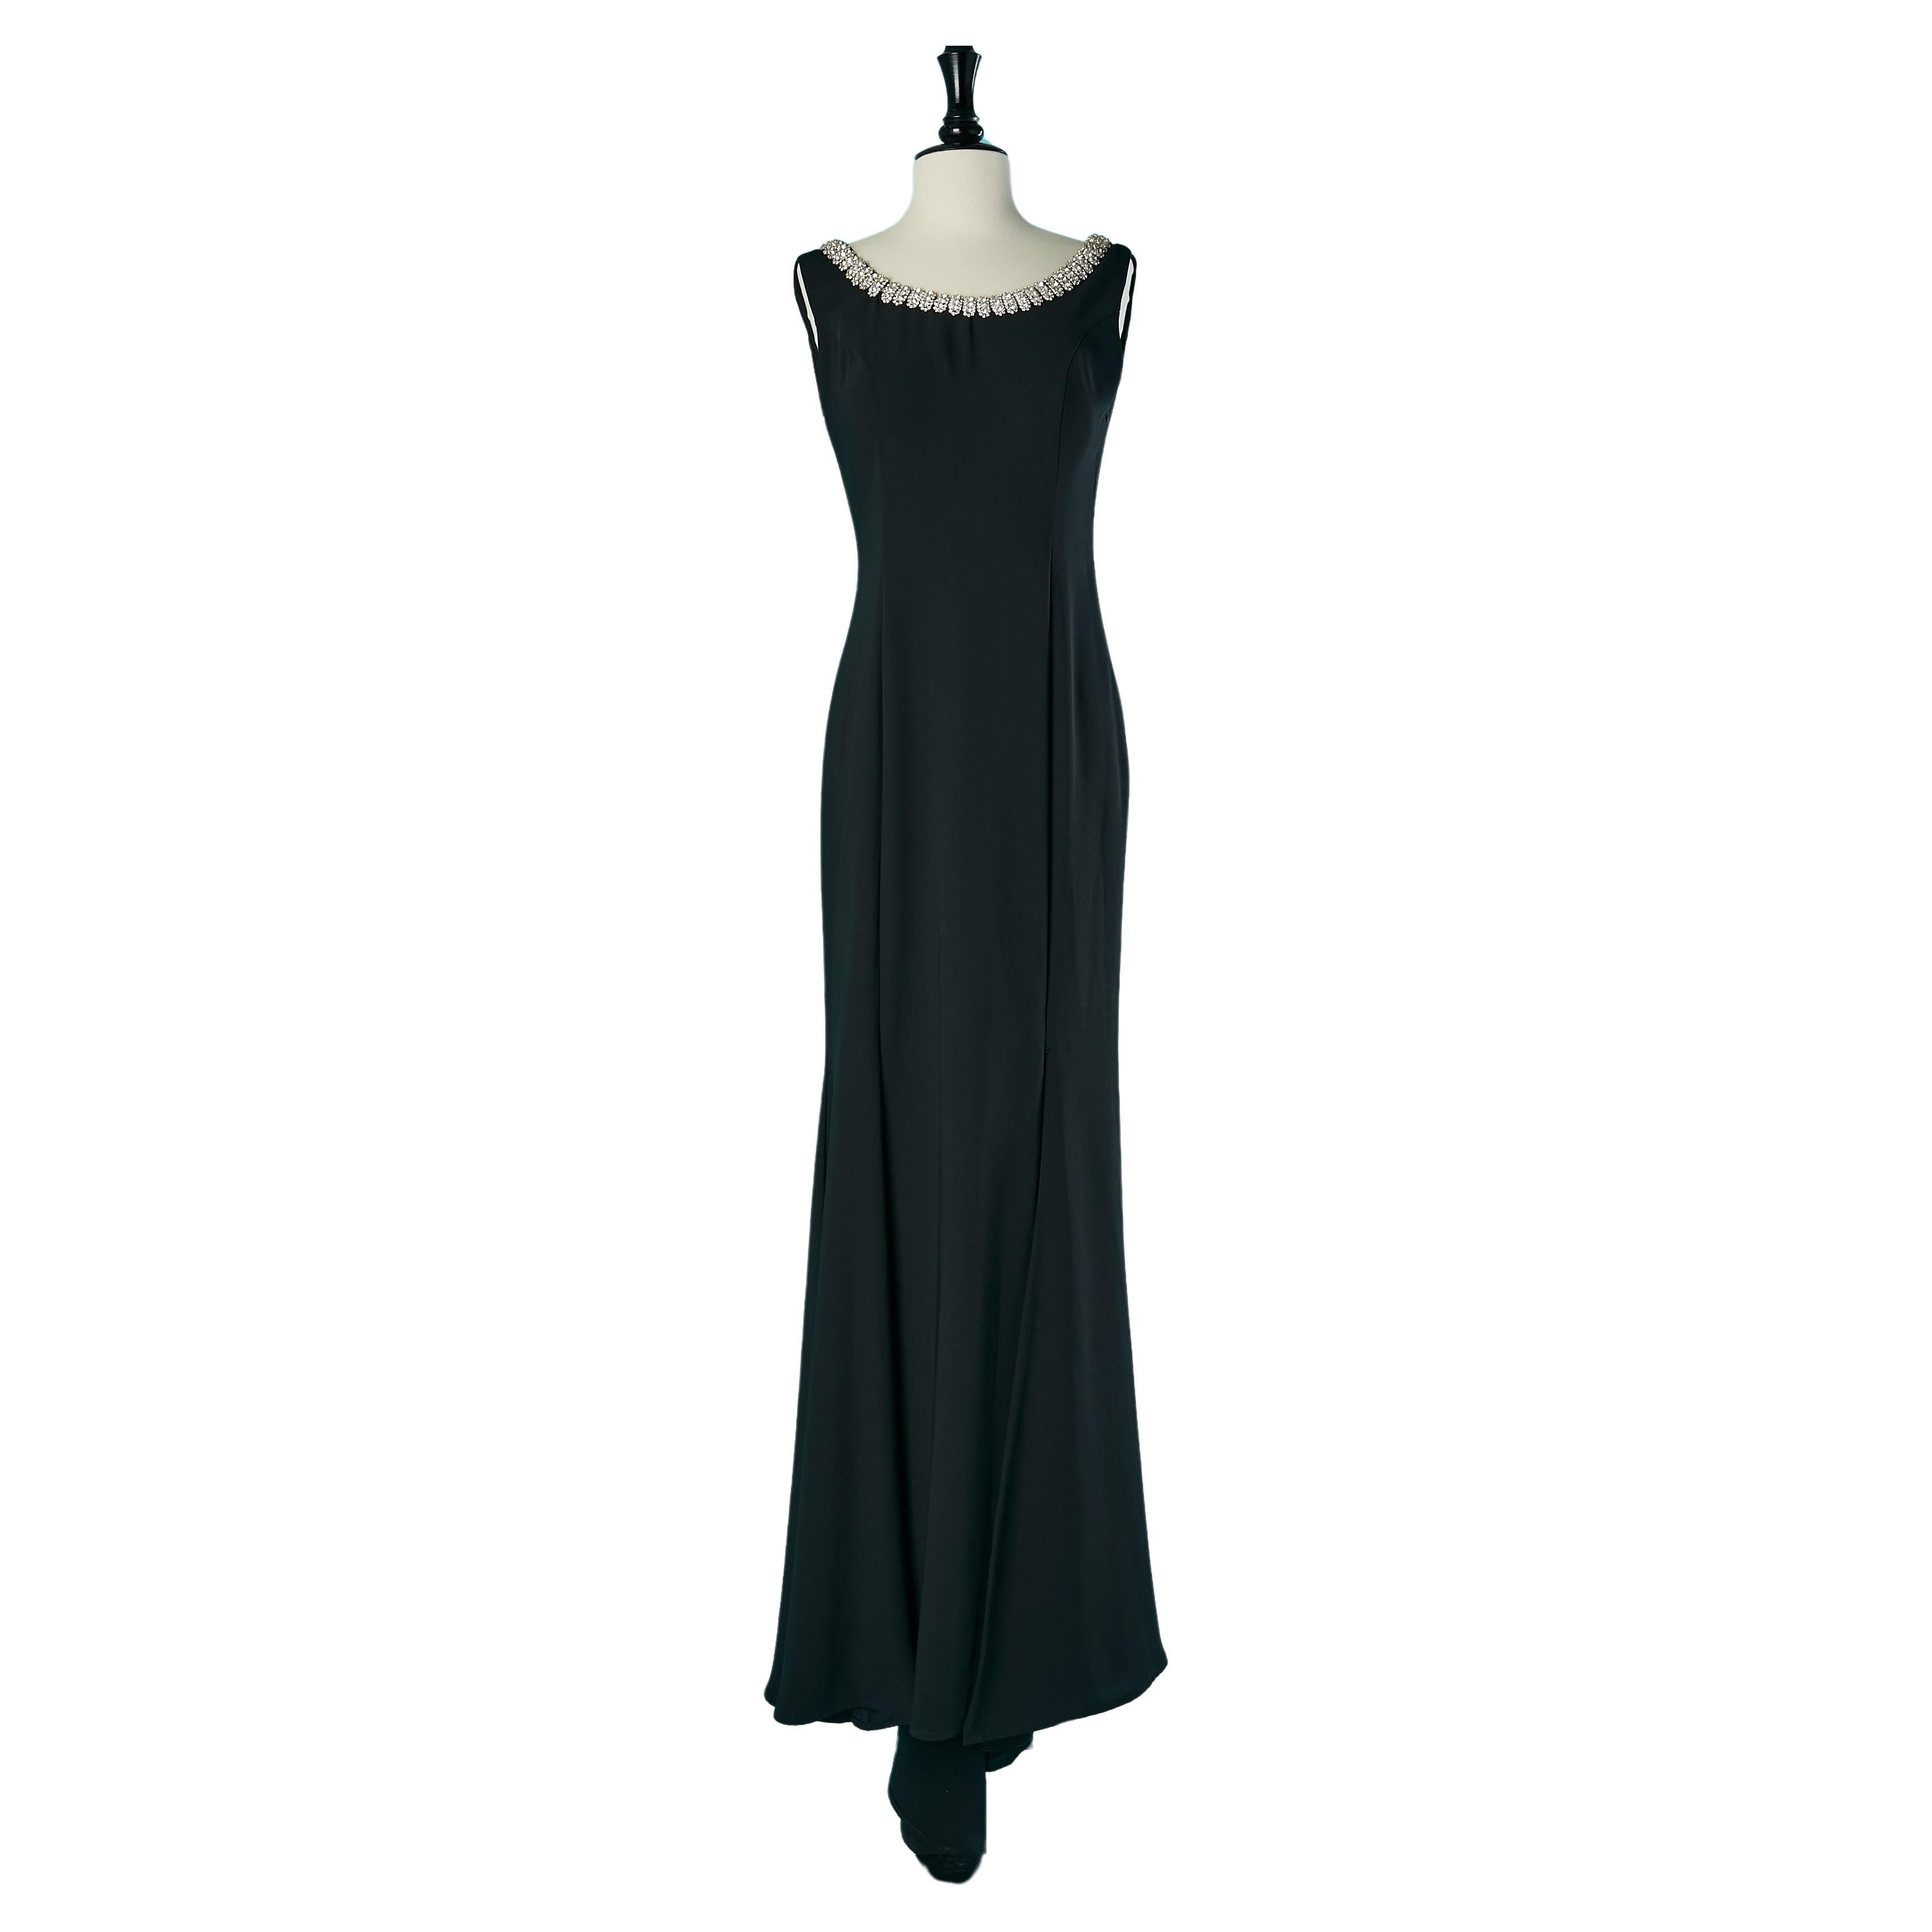 Black backless evening dress with rhinestone neckline Gai Mattiolo Red Carpet  For Sale